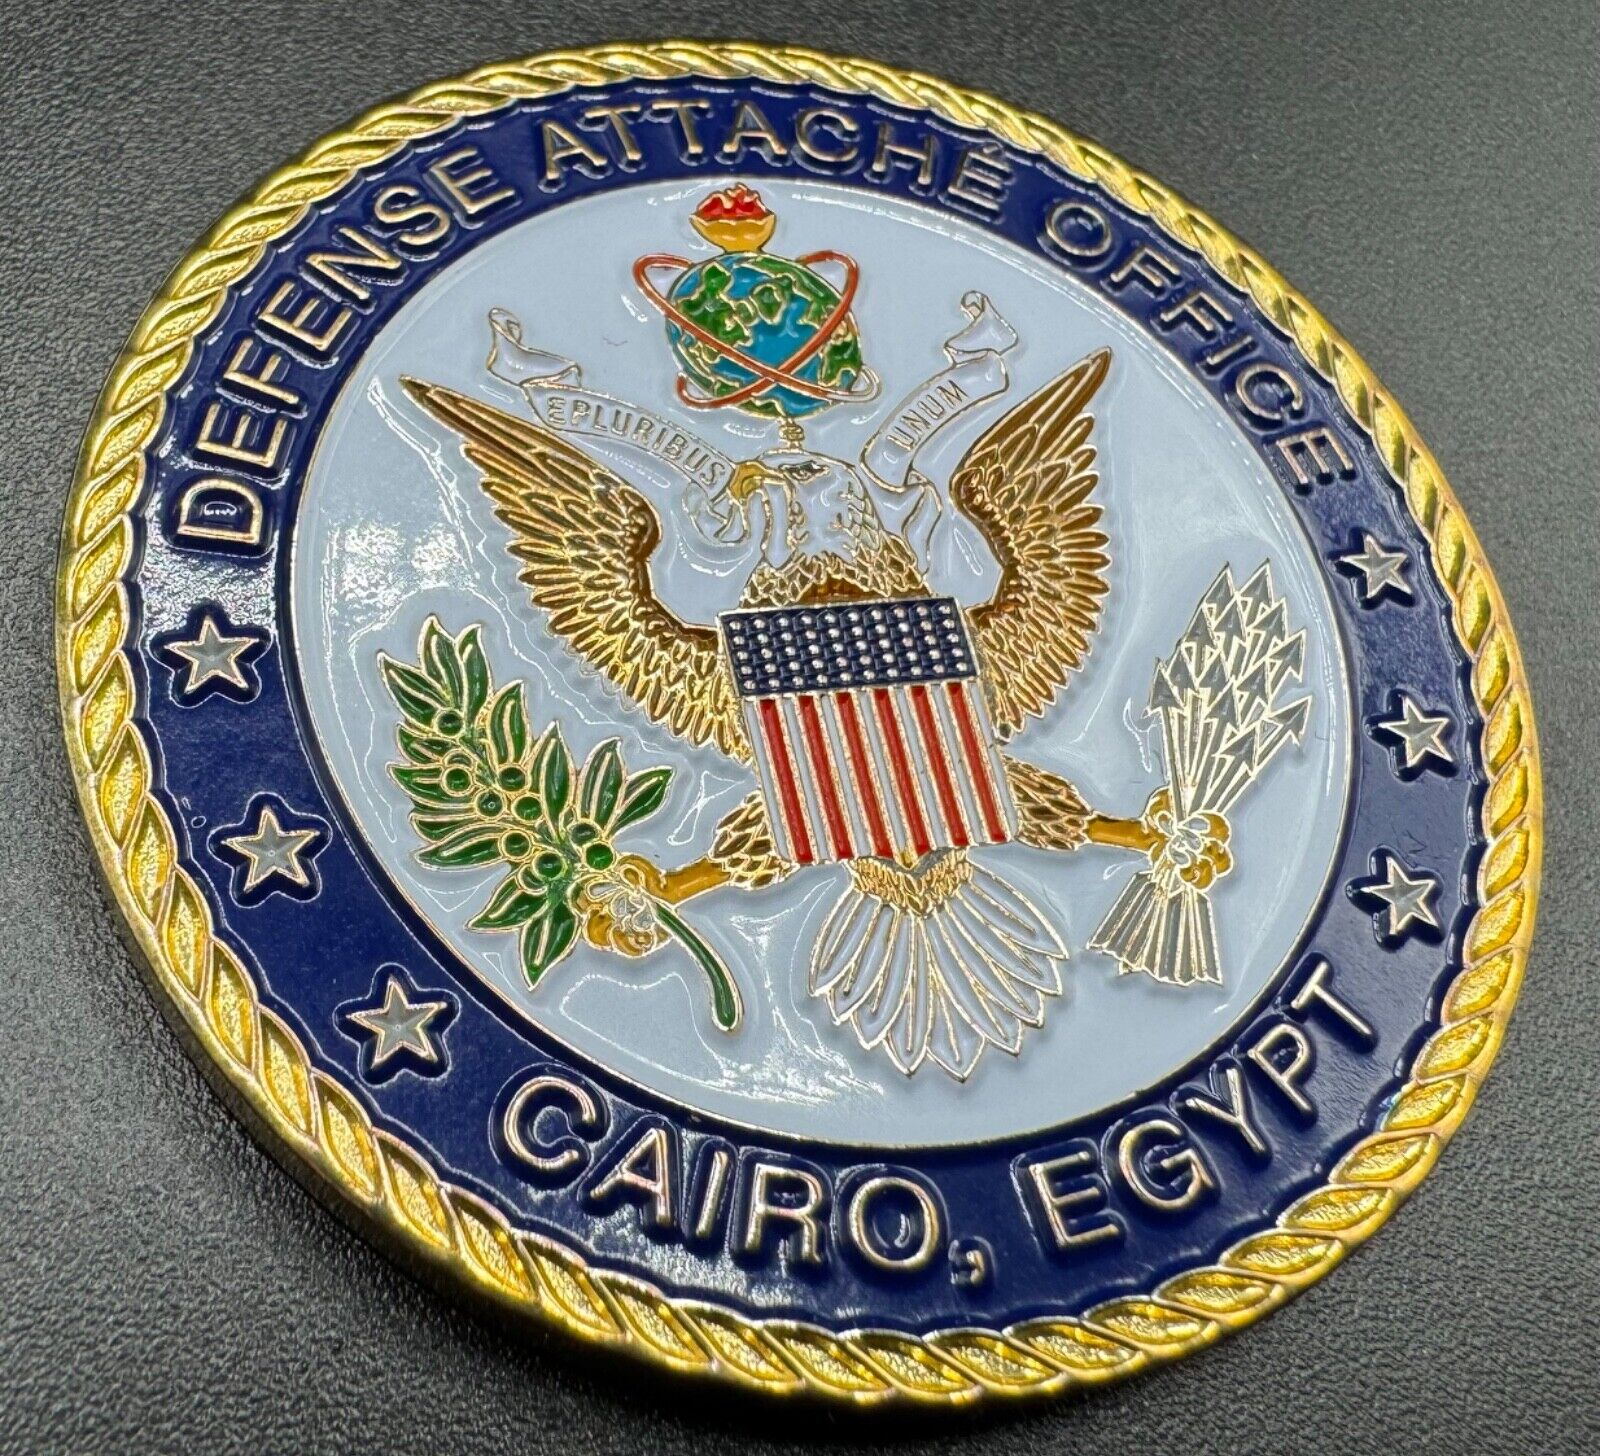 Defense Attache Office Cairo, Egypt US Embassy Republic Military Challenge Coin